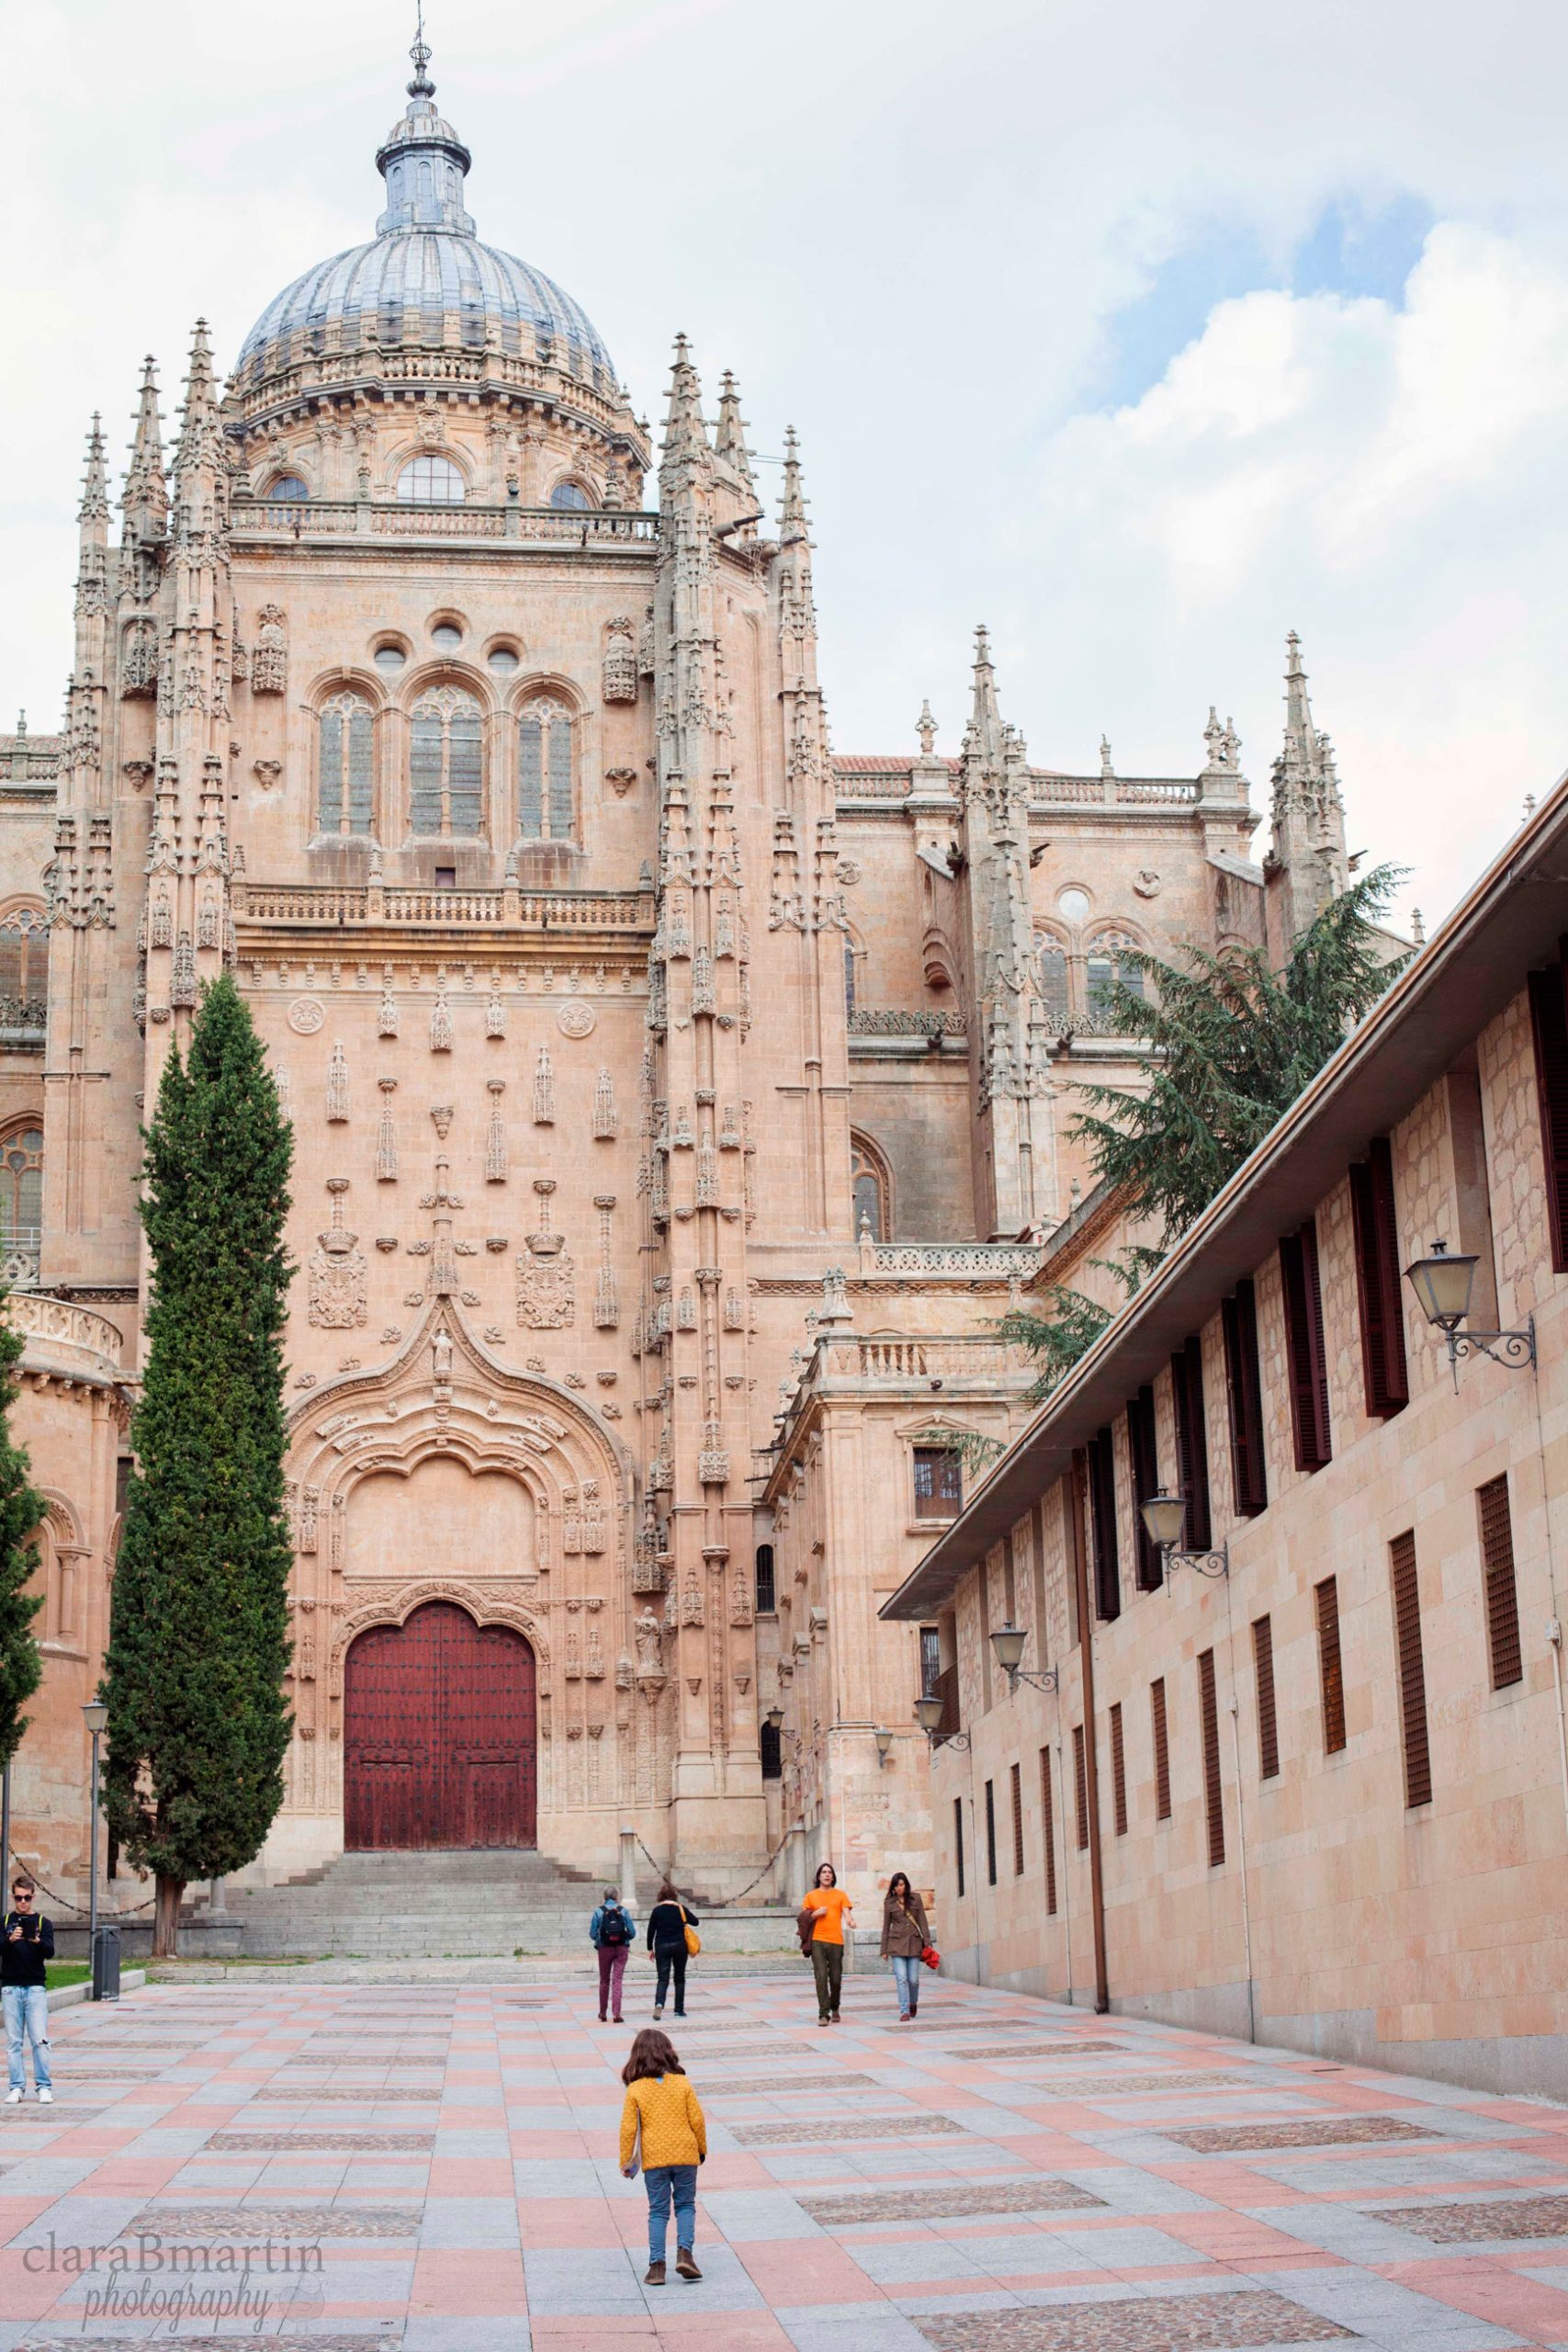 Descubriendo Salamanca